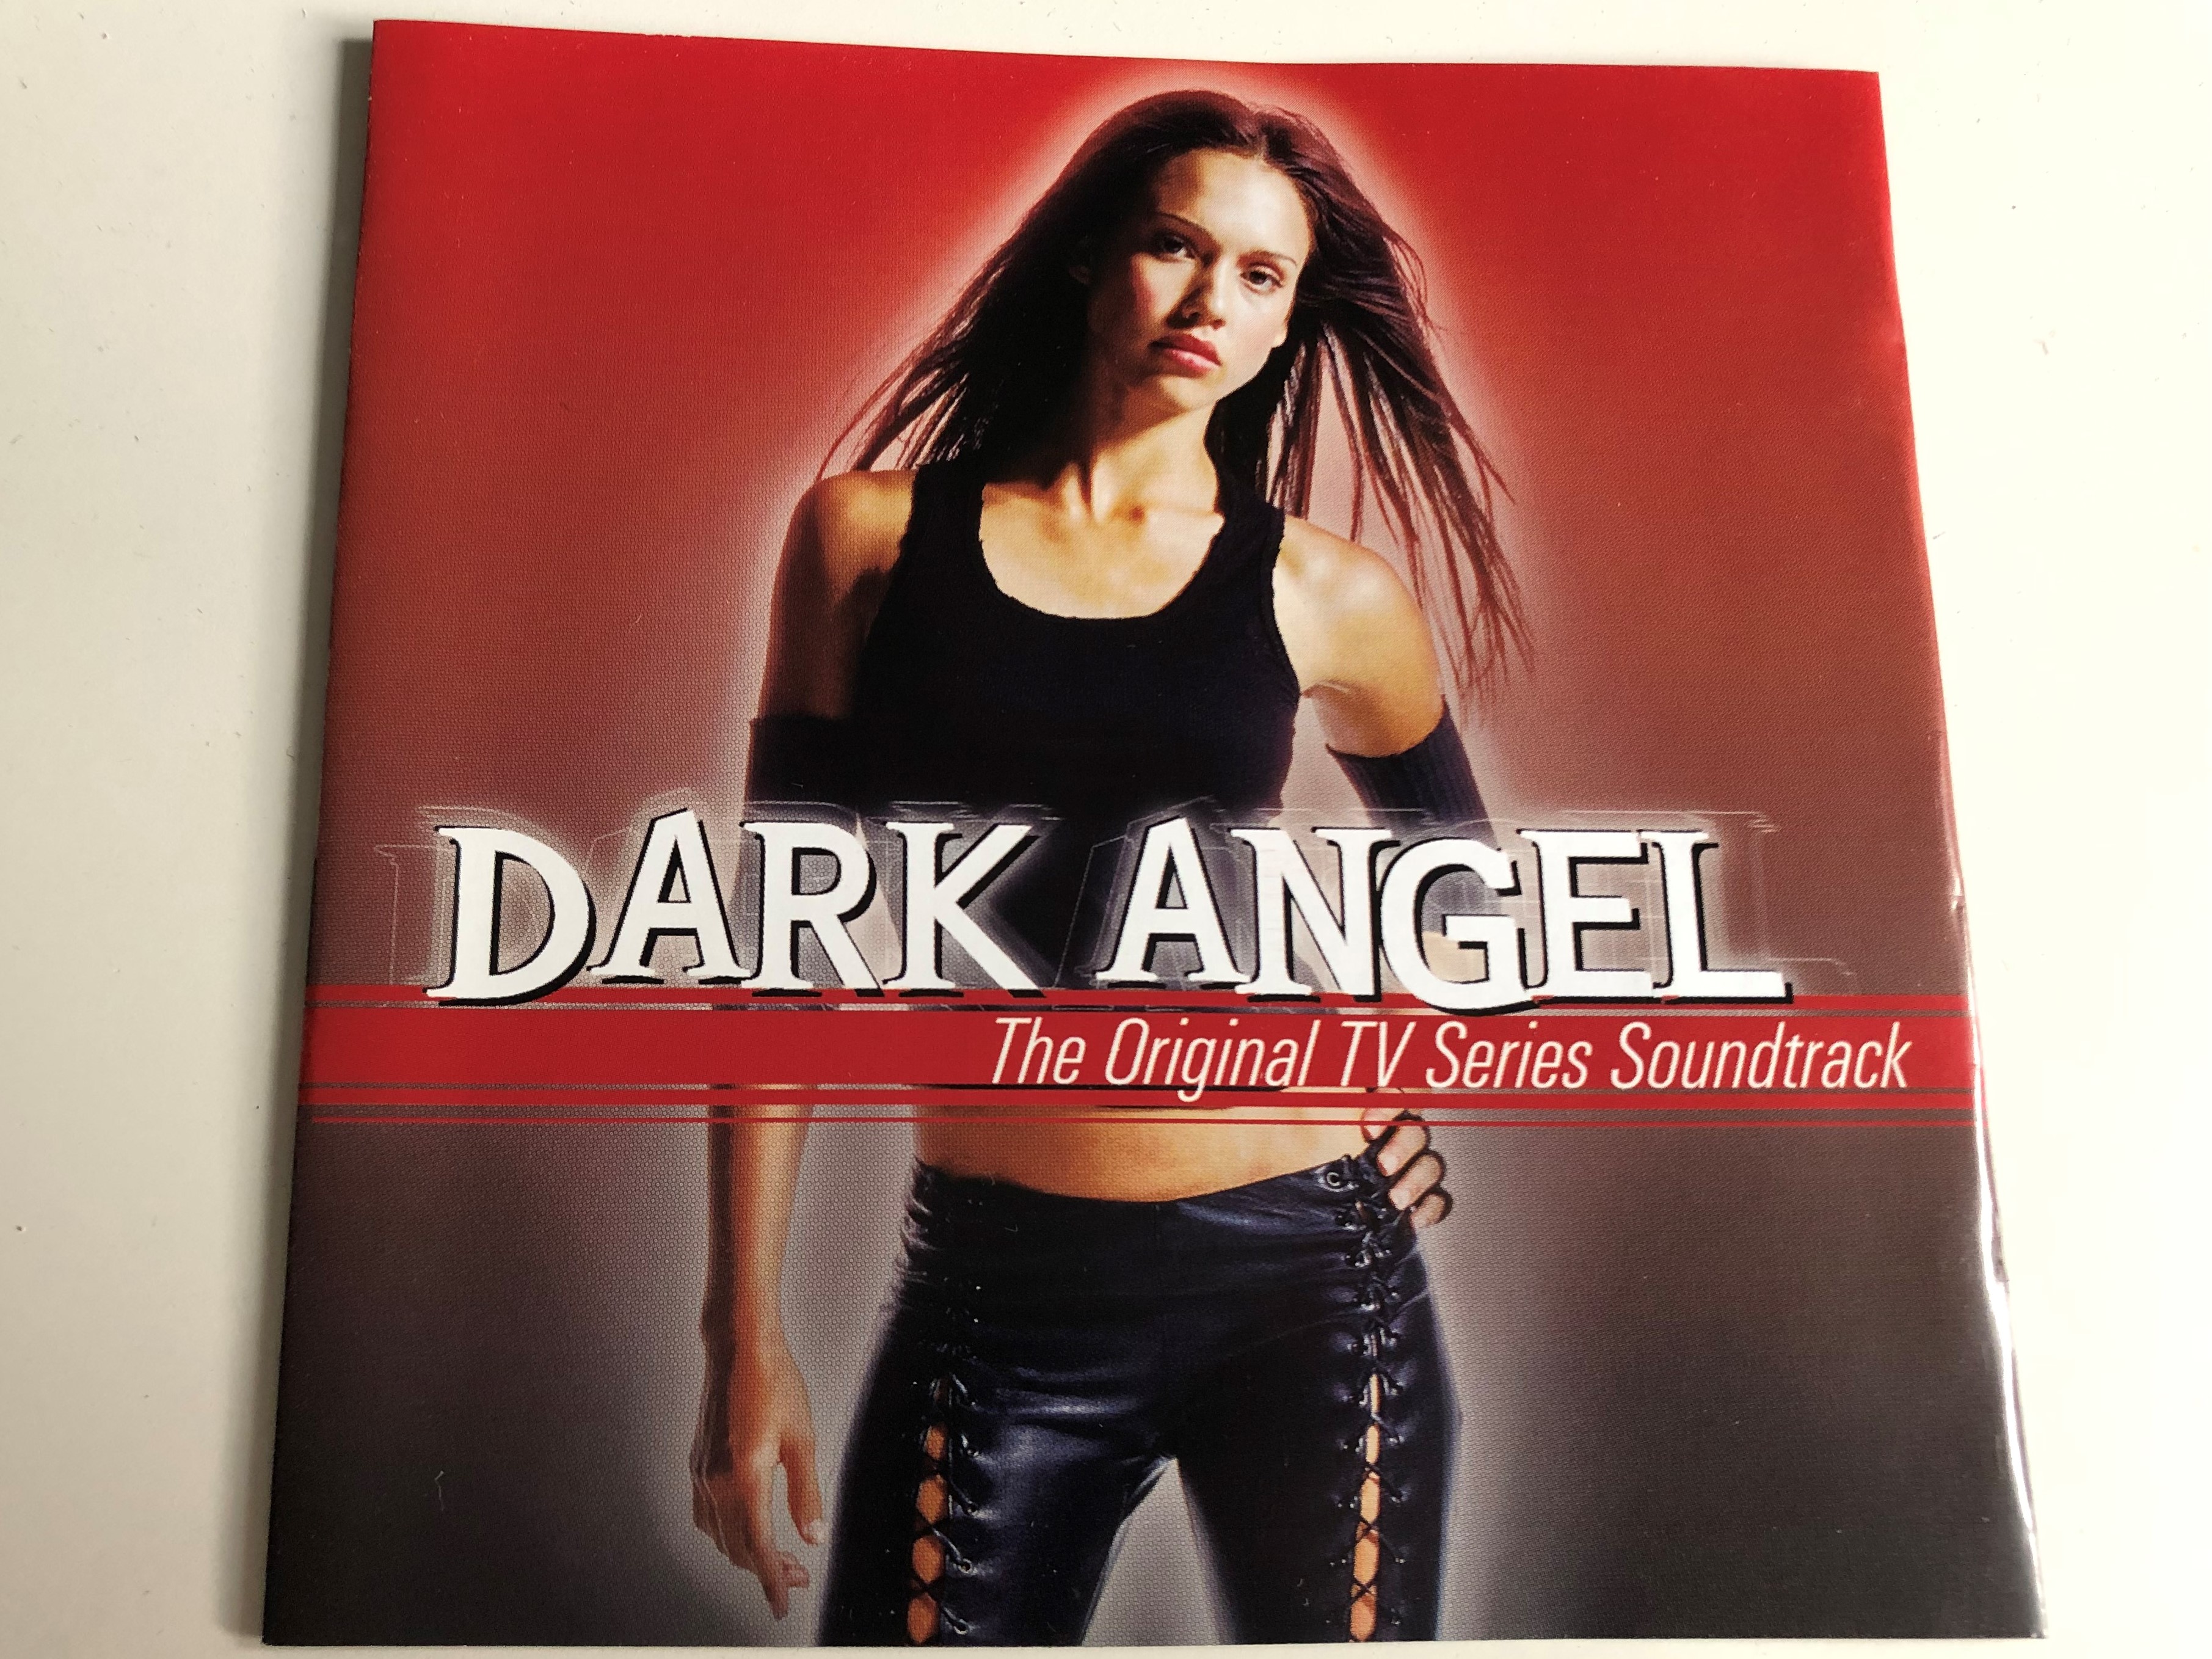 dark-angel-the-original-tv-series-soundtrack-dark-angel-theme-bring-it-to-me-bad-news-audio-cd-2002-epic-atm-5079042-1-.jpg